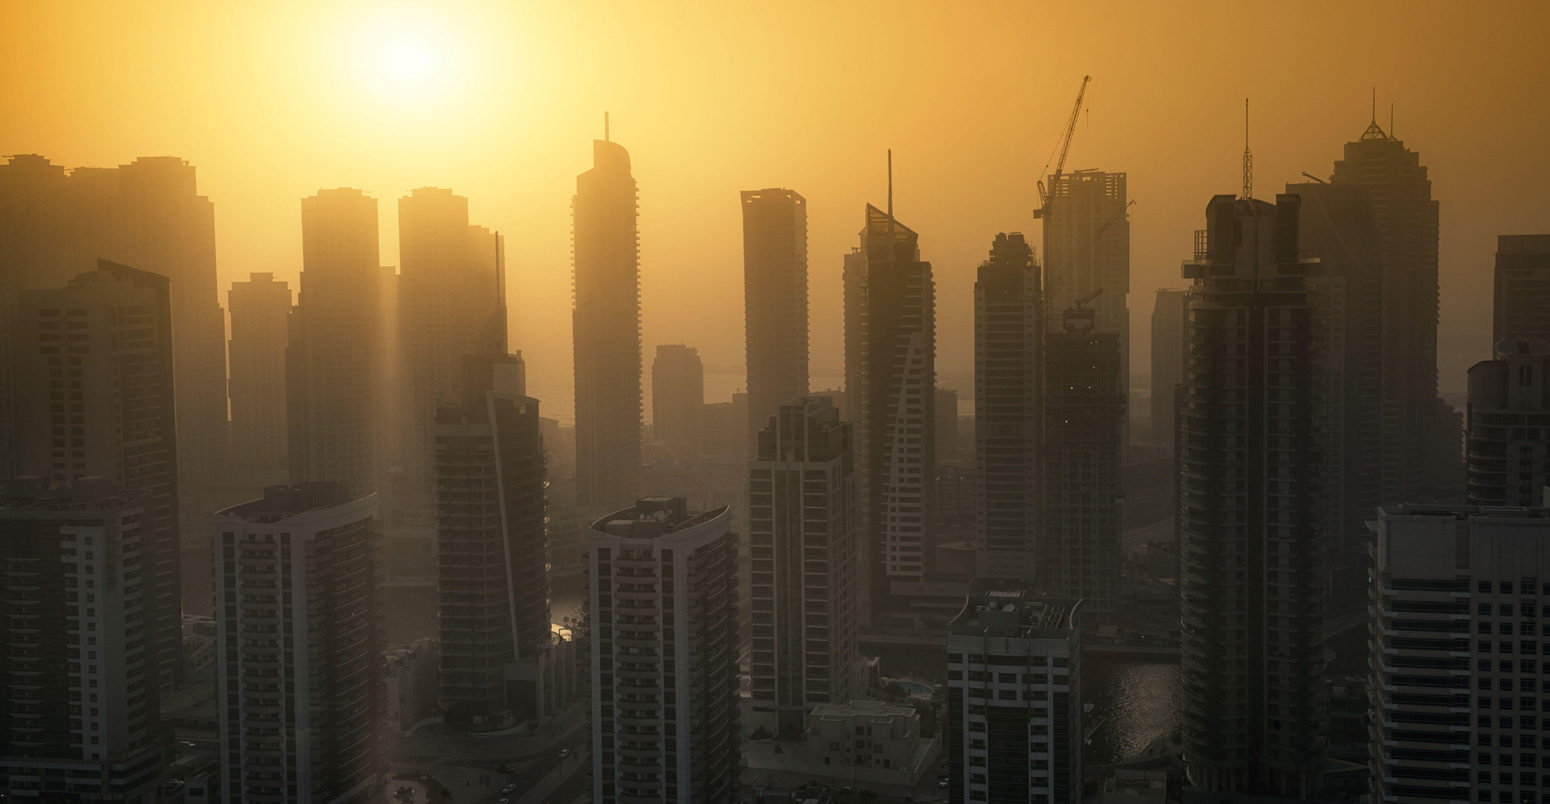 Dubai Marina skyscrapers at sunset with heat haze. May 2017. Andrew Deer / Alamy Stock Photo